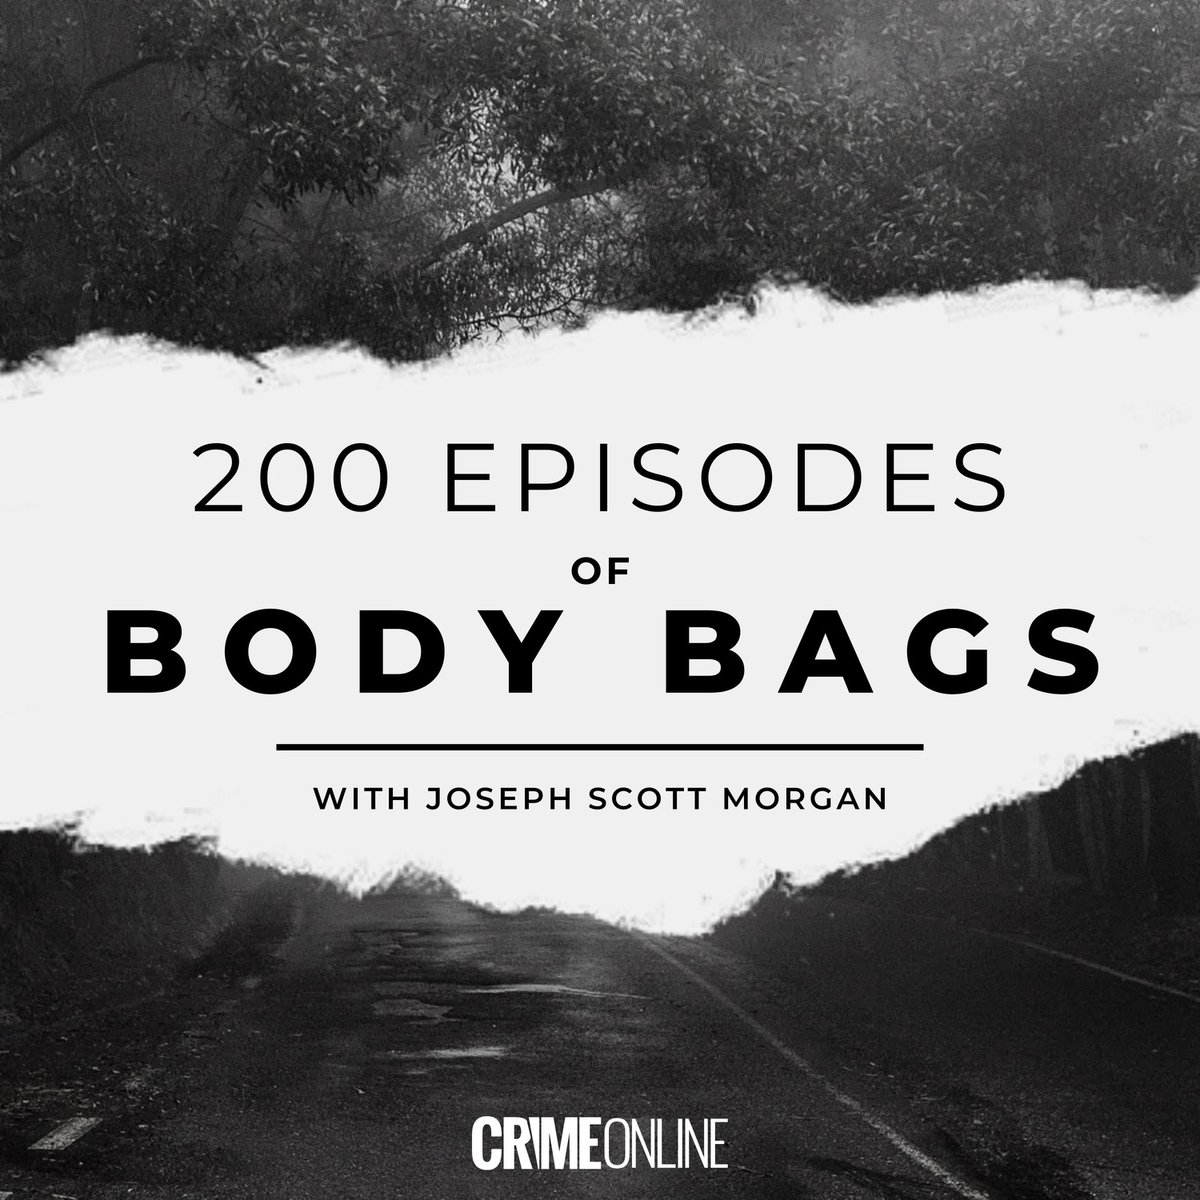 Thanks to ALL of our friends and supporters! 200 EPISODES of Body Bags with Joseph Scott Morgan! @NancyGrace @crimeonlinenews @CrimeCon @JulieCourtTV @VinniePolitan @149Zone7 @HamptonsWhodun @oxygen